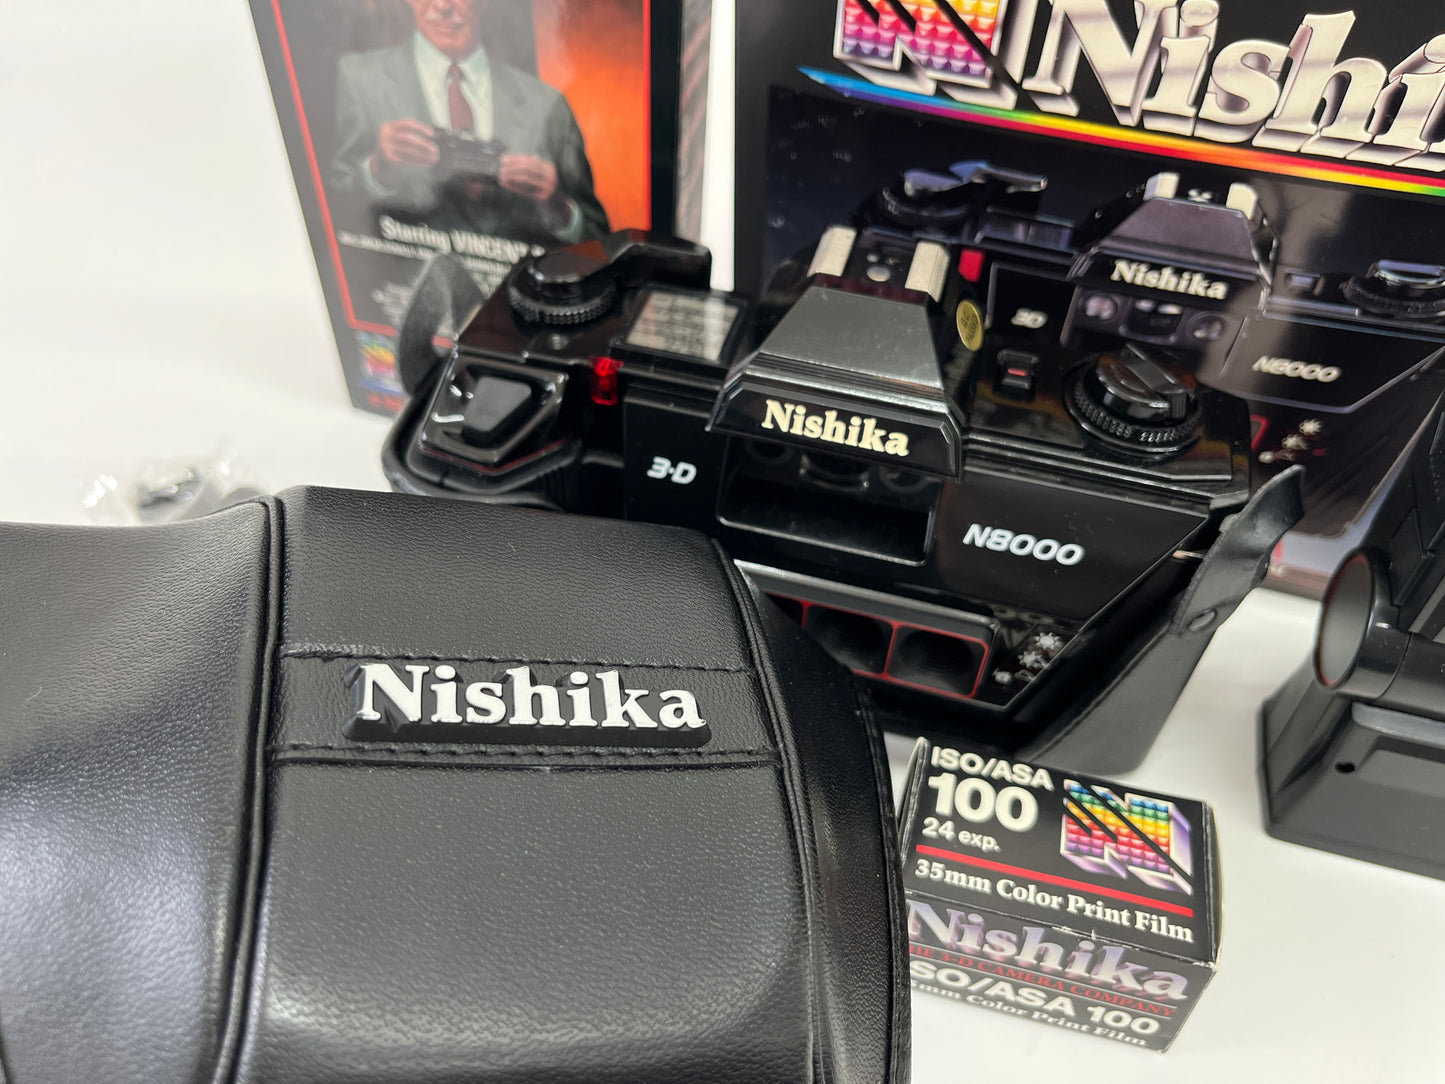 Nishika 3D N8000 Camera Kit Brand New Old Stock NOS Rare